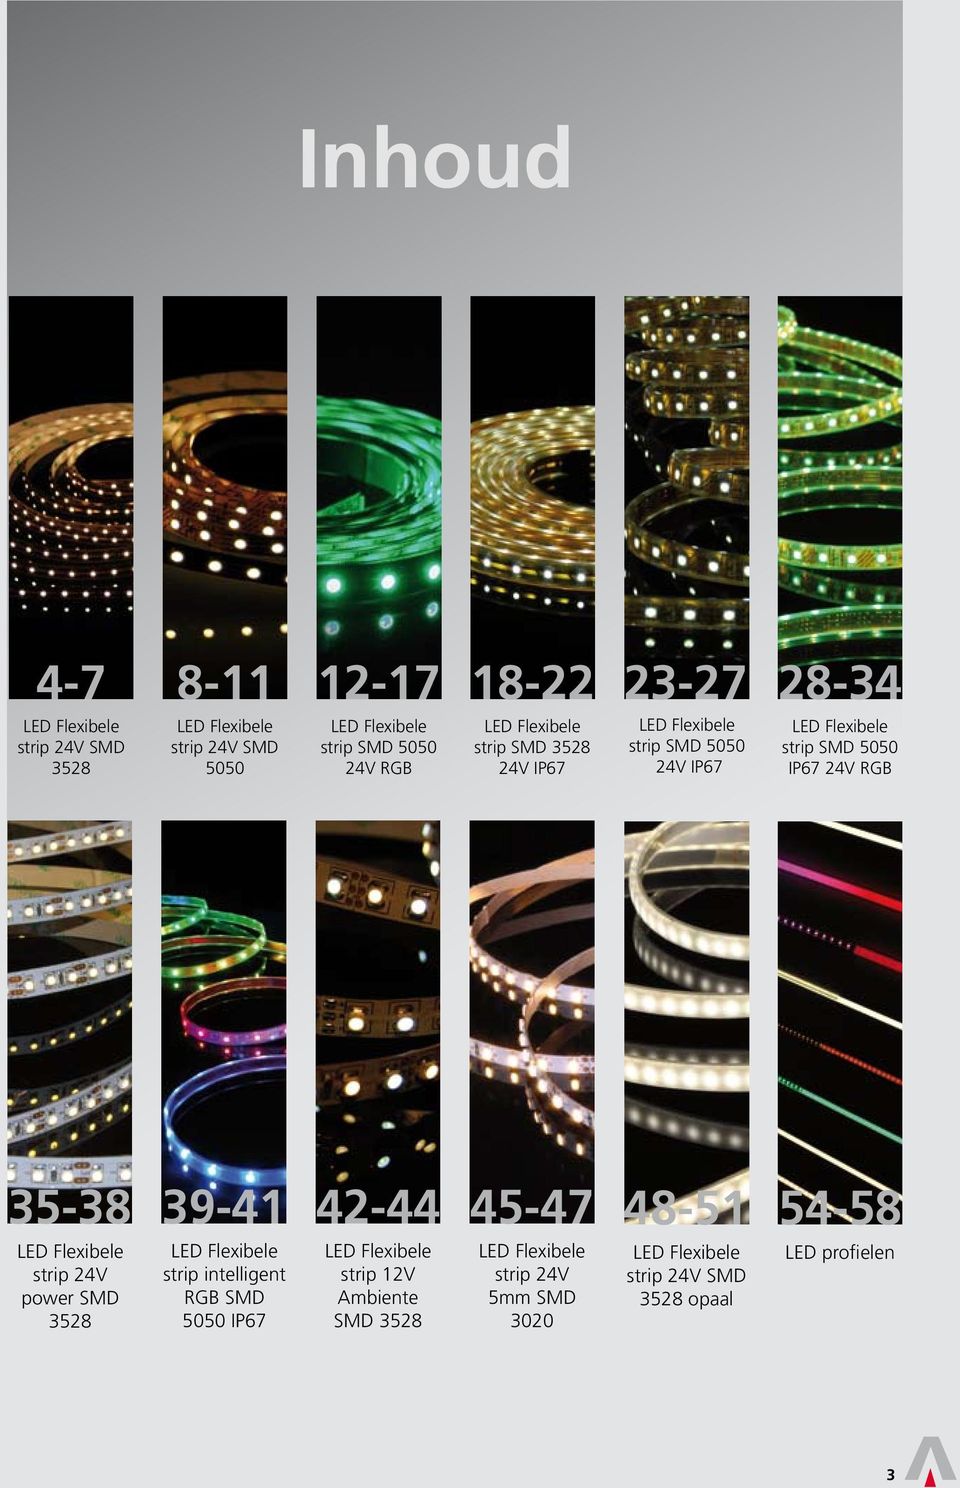 RGB 35-38 39-41 42-44 45-47 48-51 54-58 LED Flexibele strip 24V power SMD 3528 LED Flexibele strip intelligent RGB SMD 5050 IP67